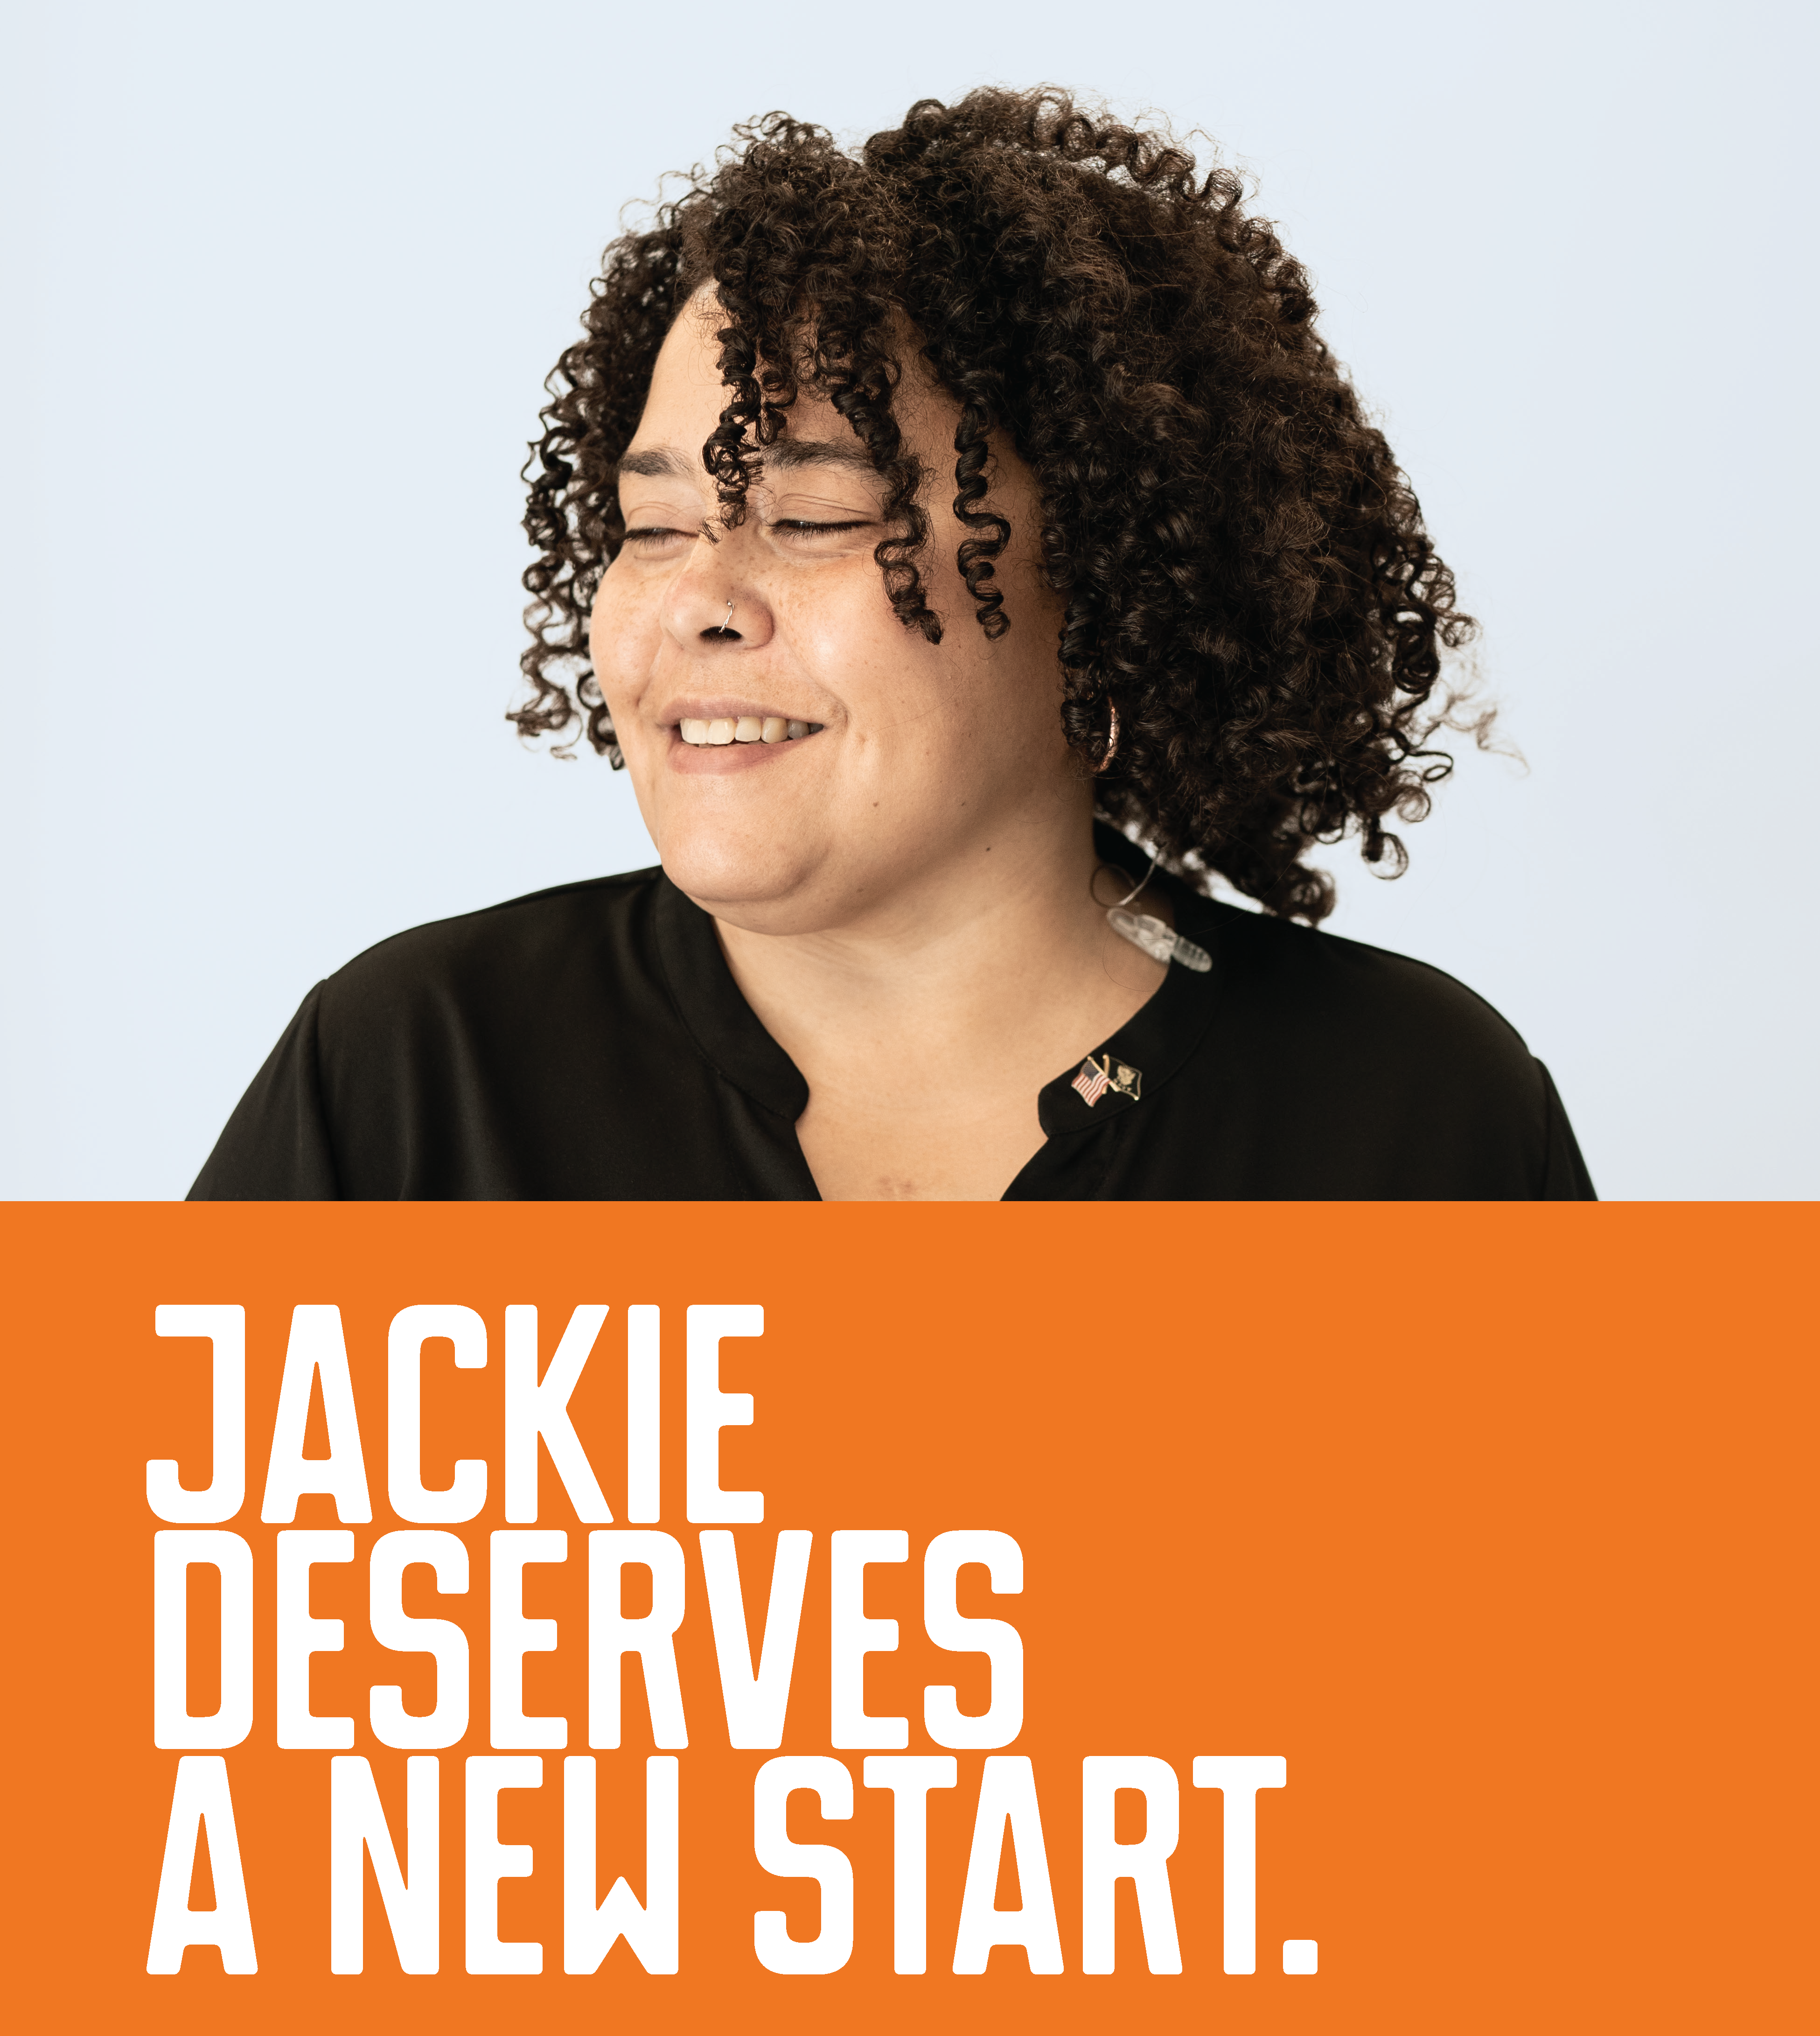 Jackie deserves a new start.